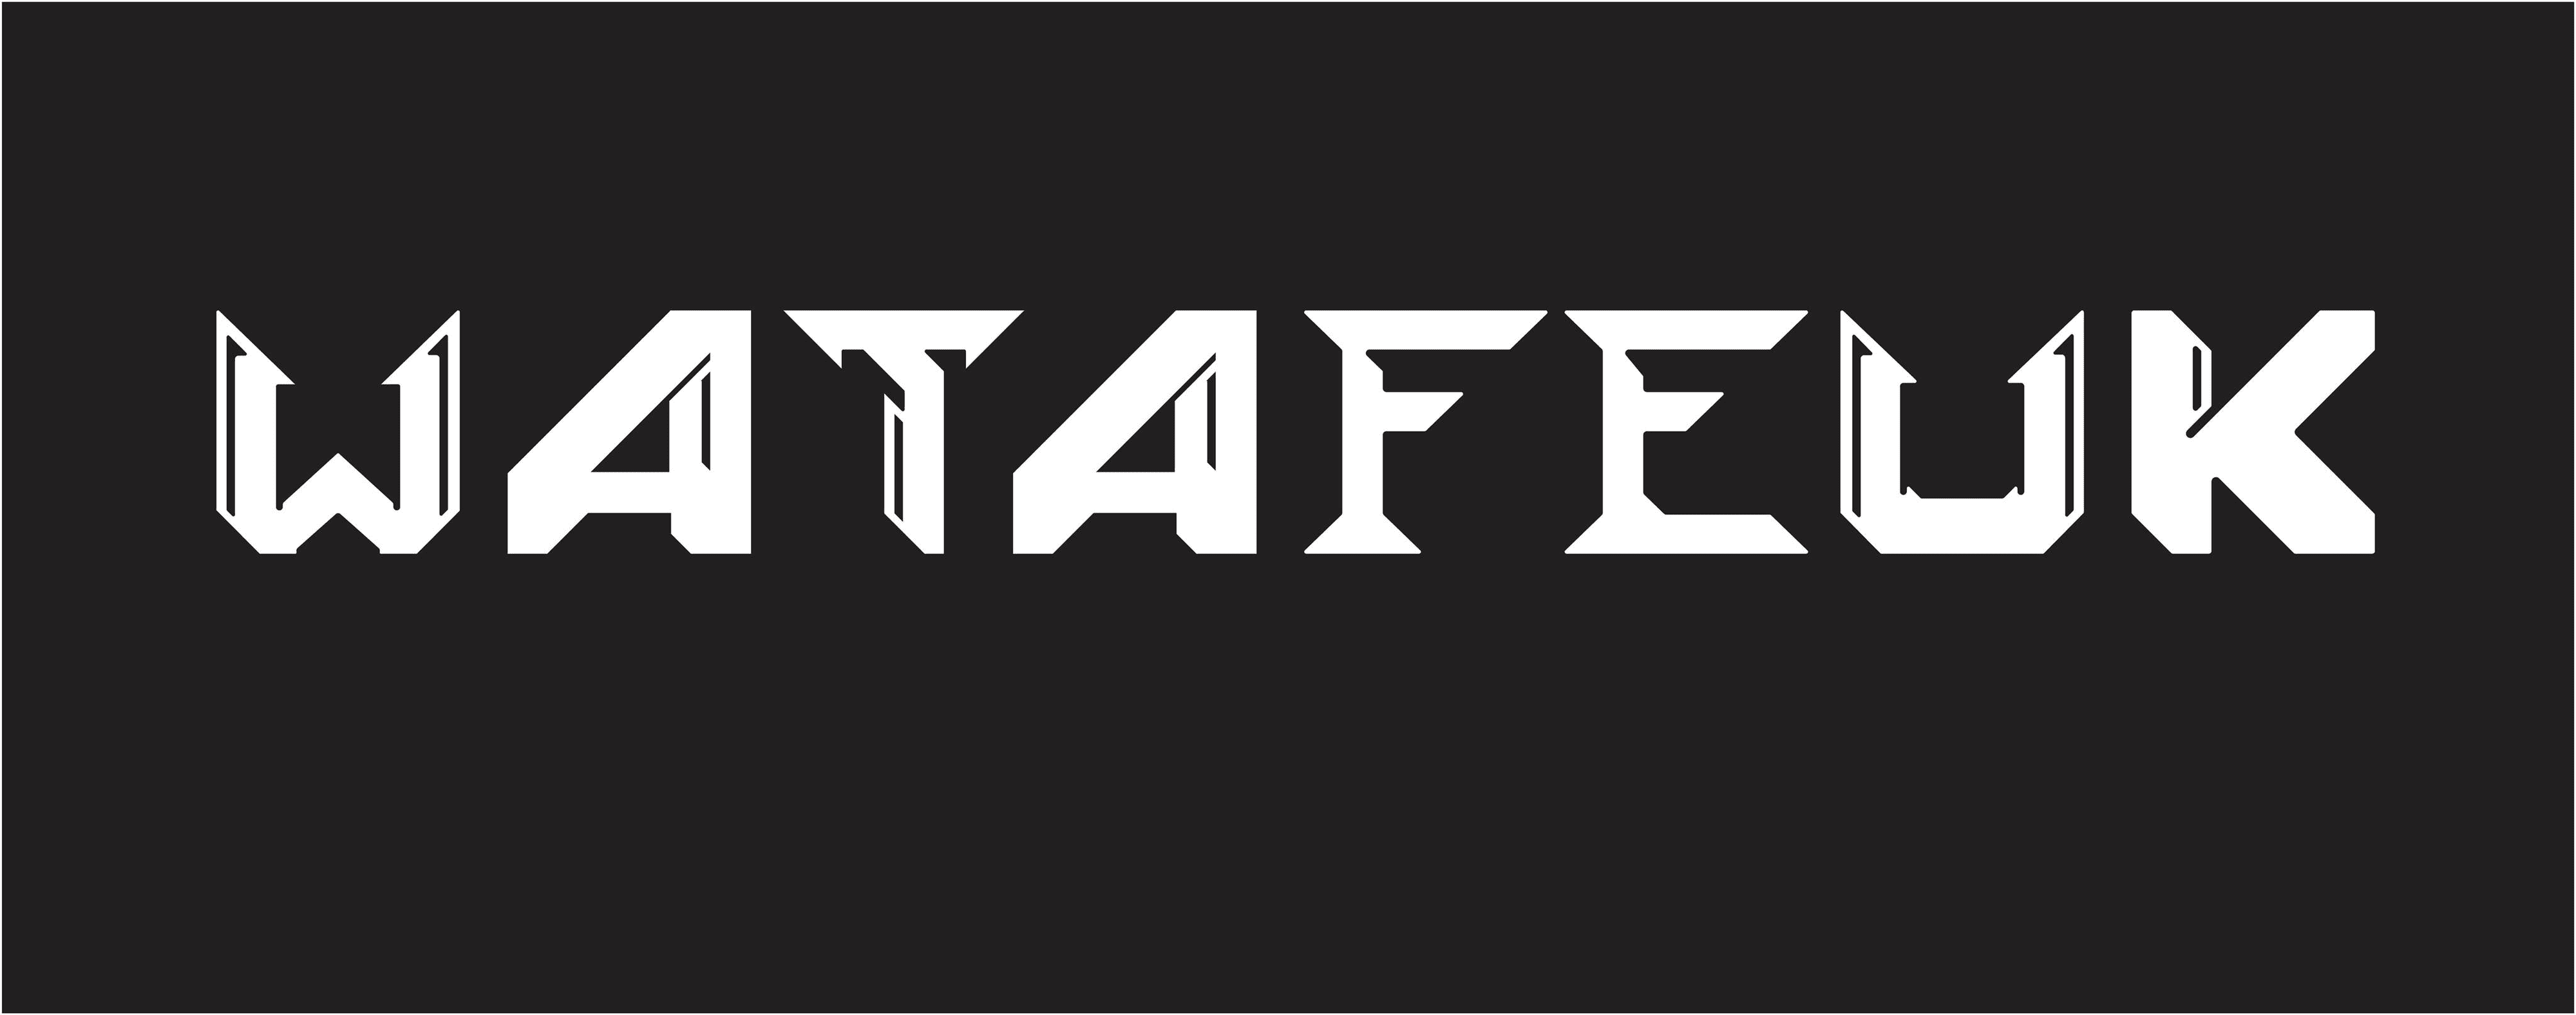 Flarff banner